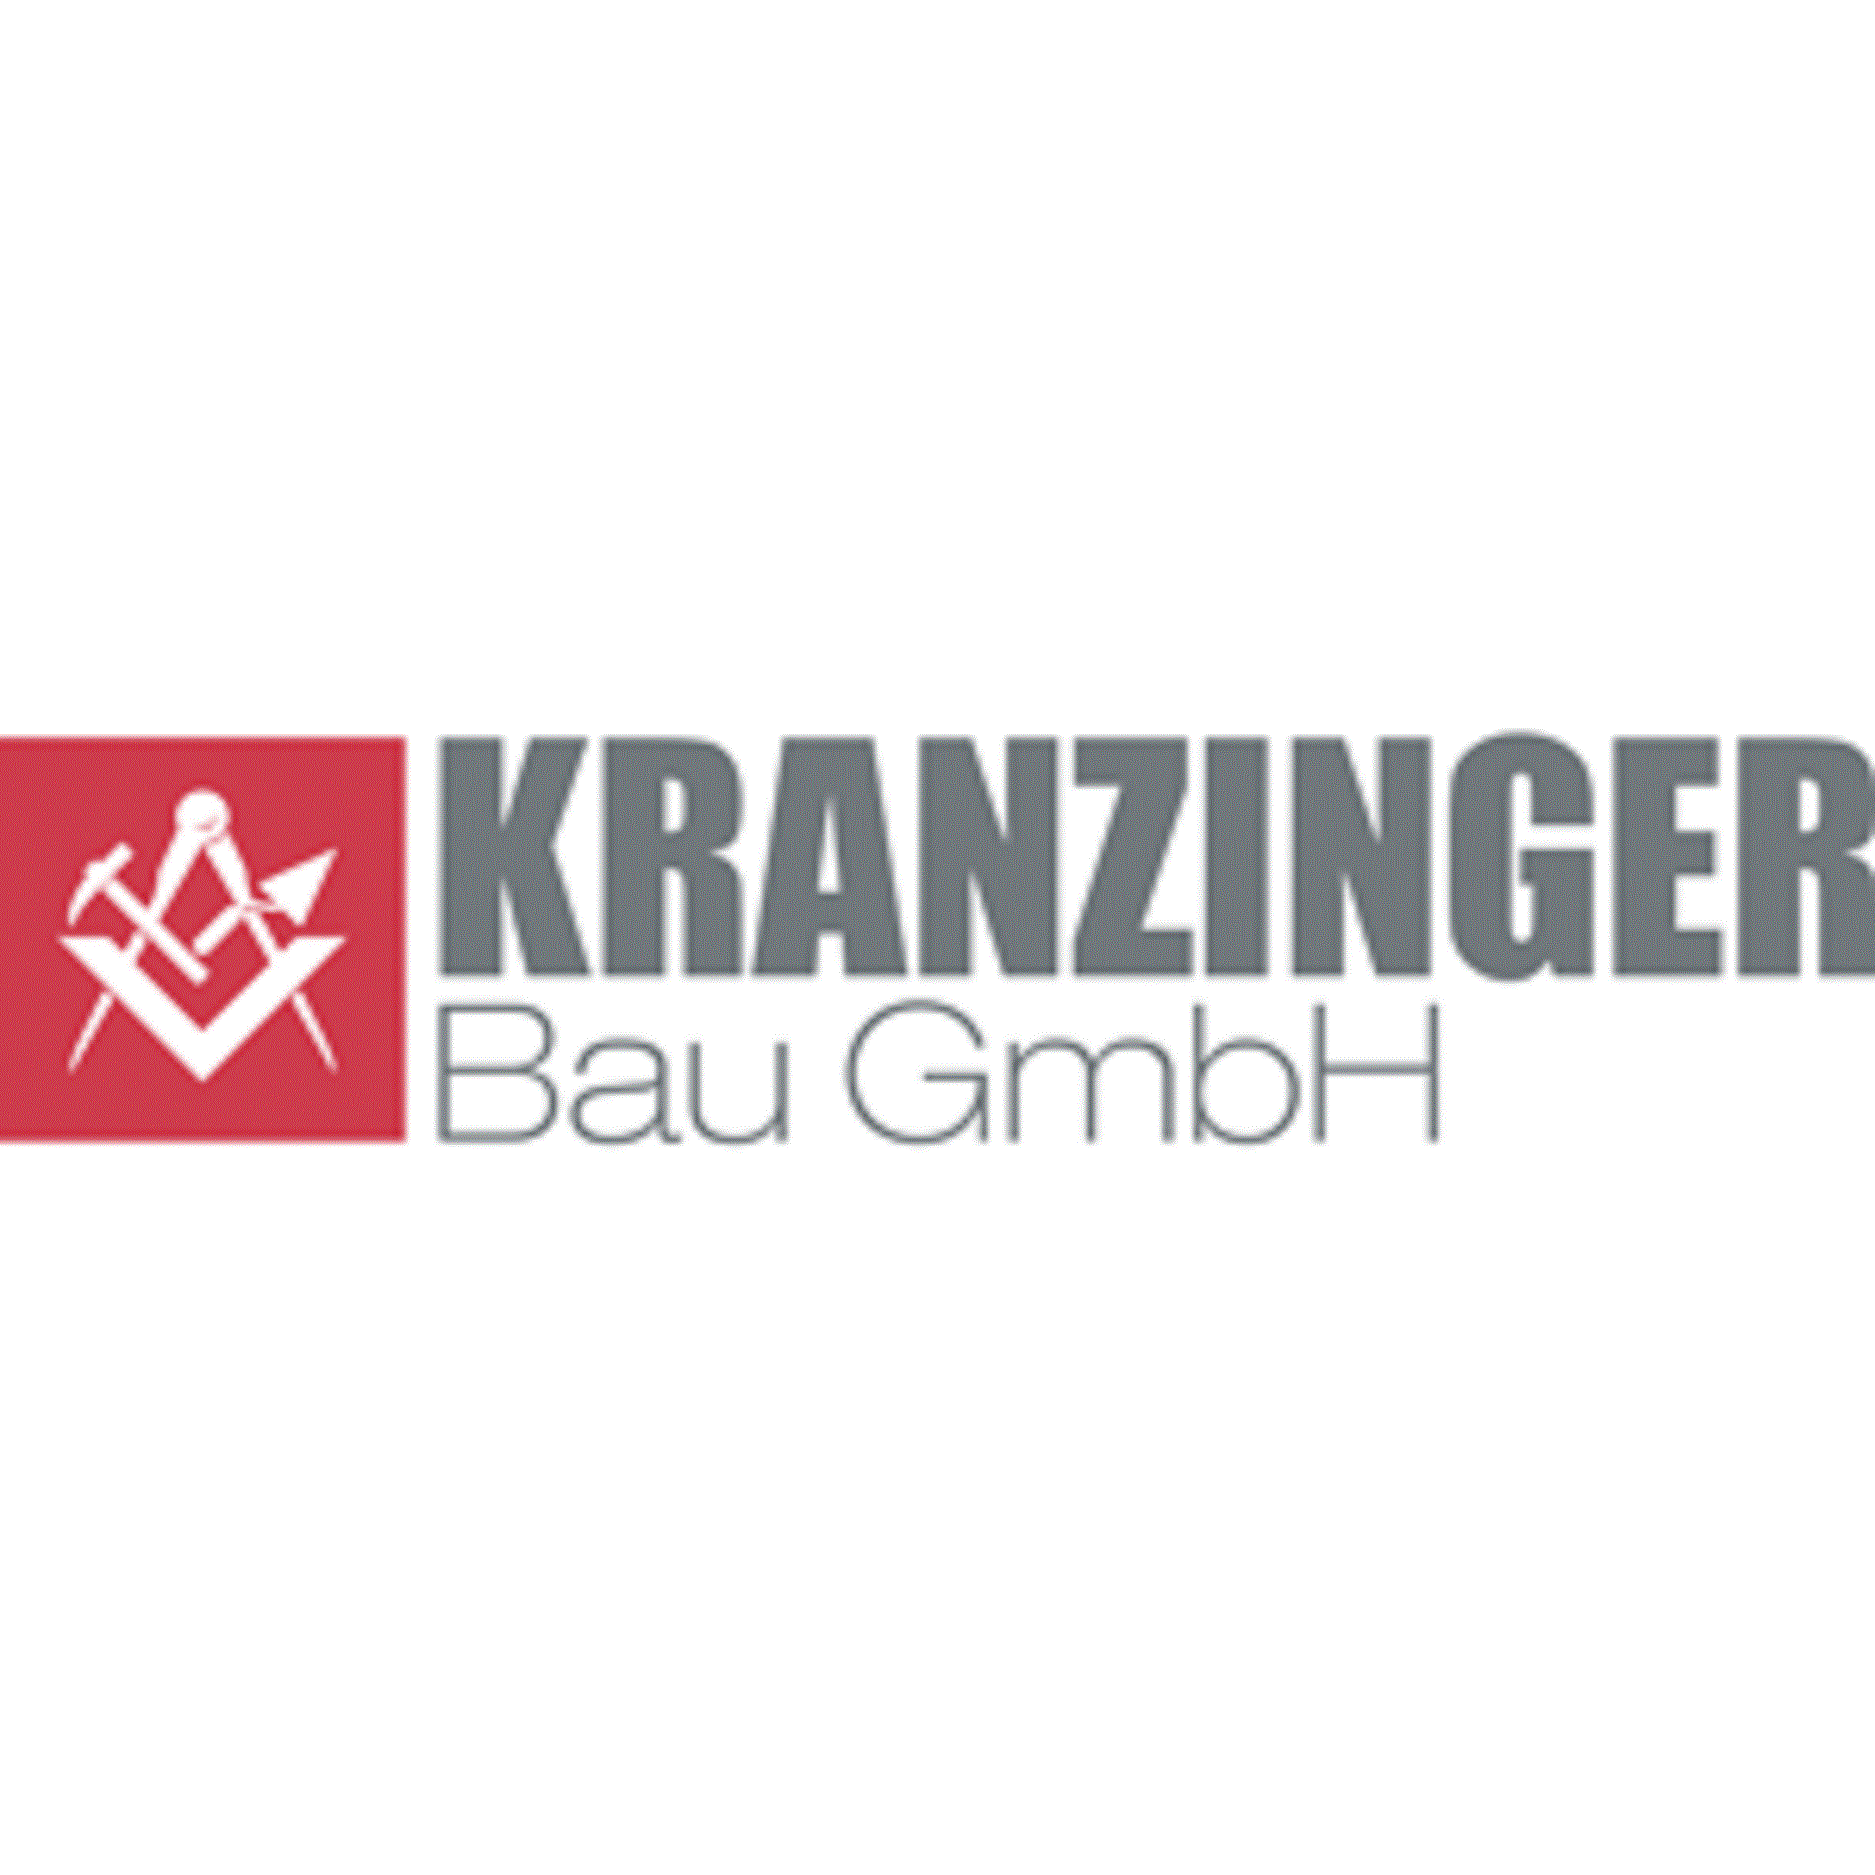 Kranzinger Bau GmbH Logo